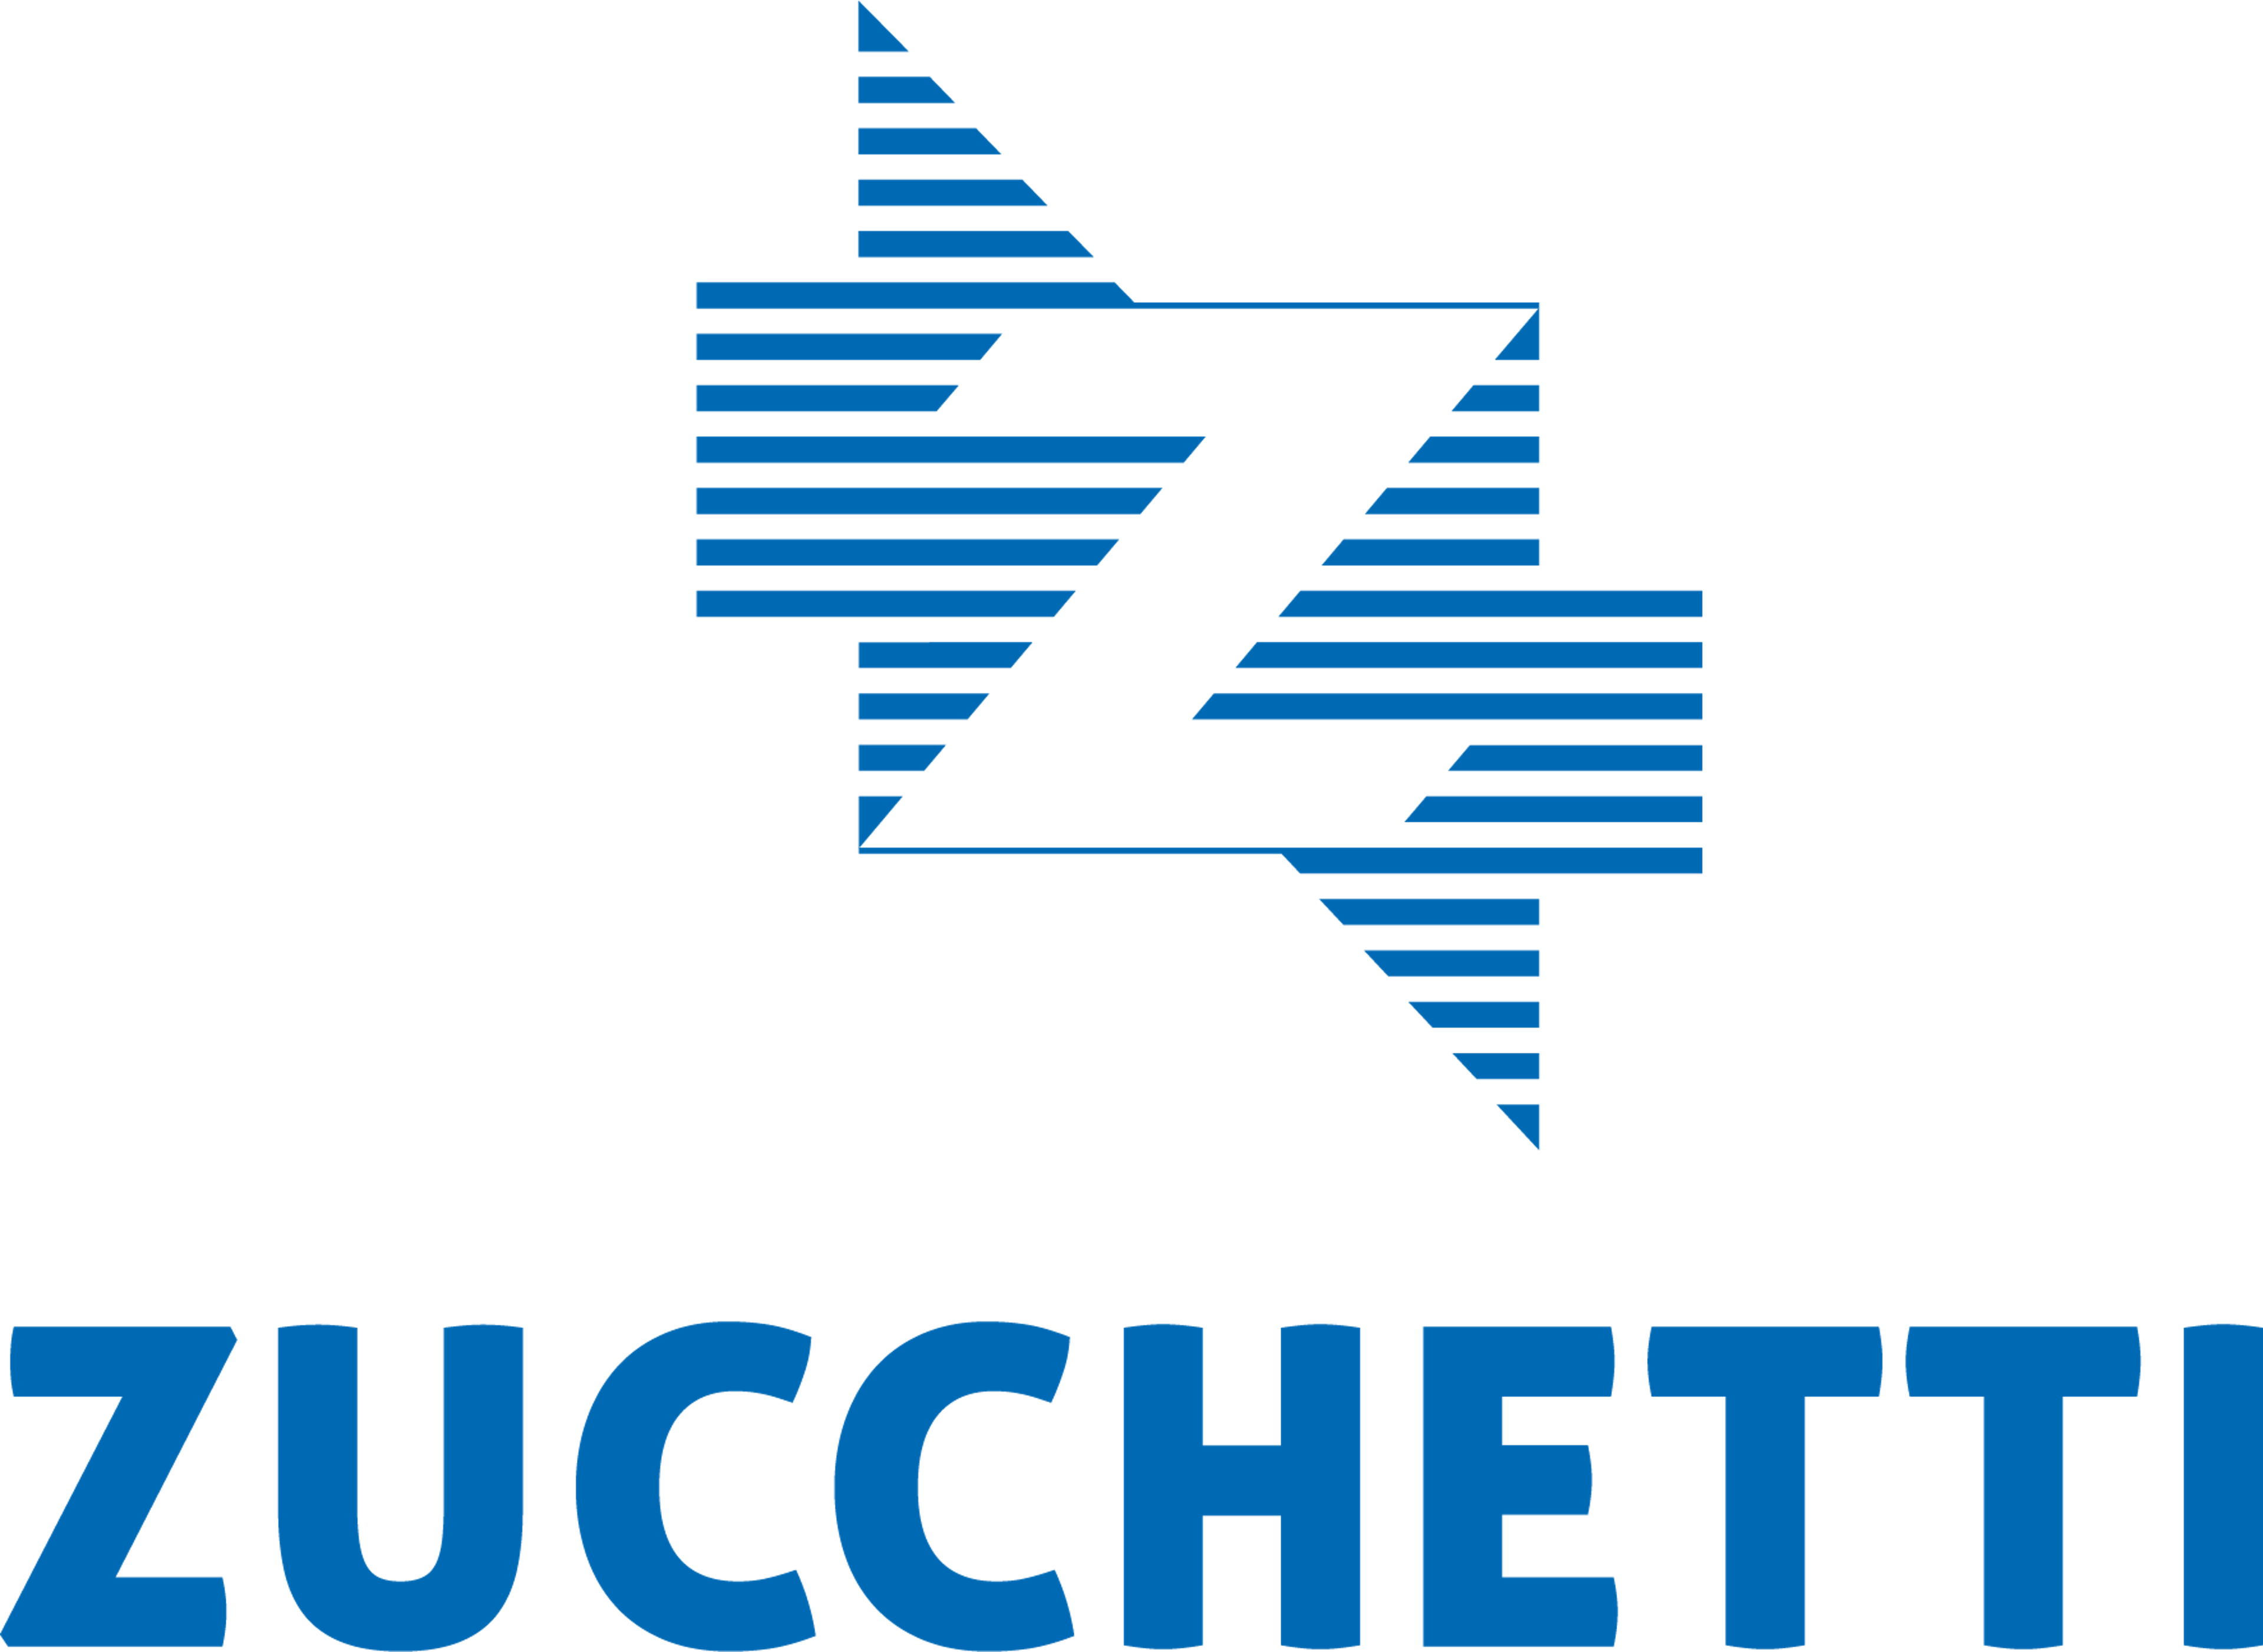 Zucchetti Time and Attendance Logo